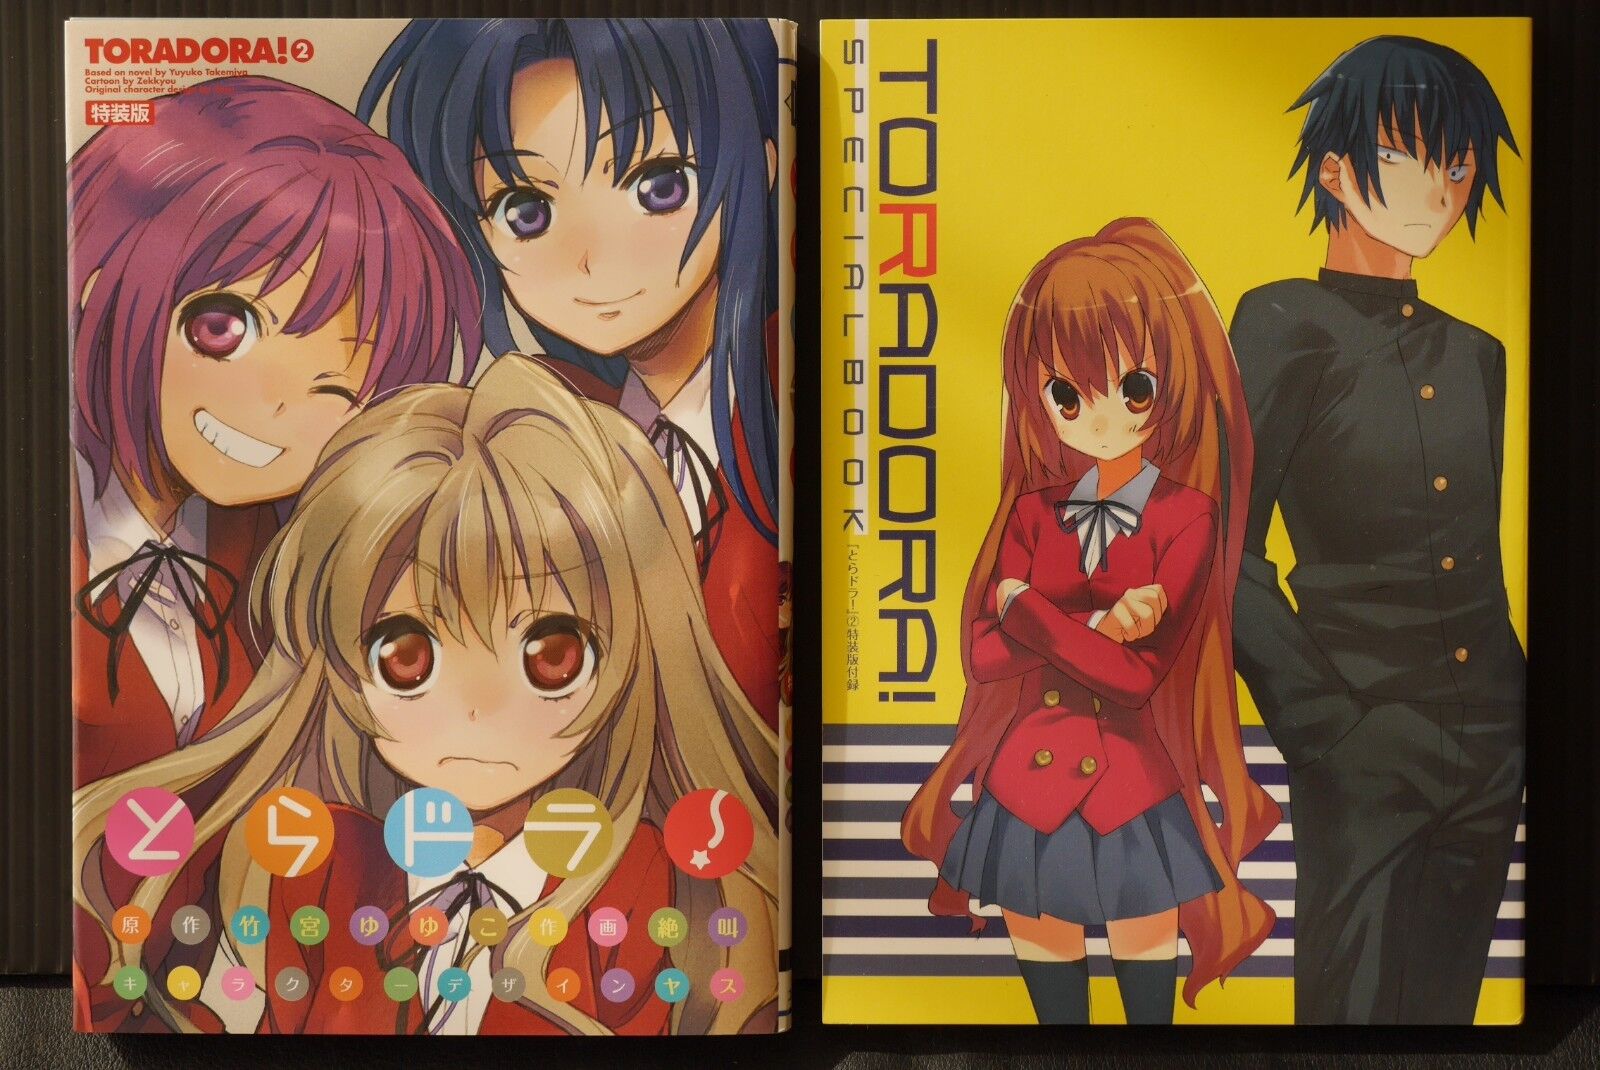 Toradora Vol.2 Manga, Limited Edition with Booklet - JAPAN